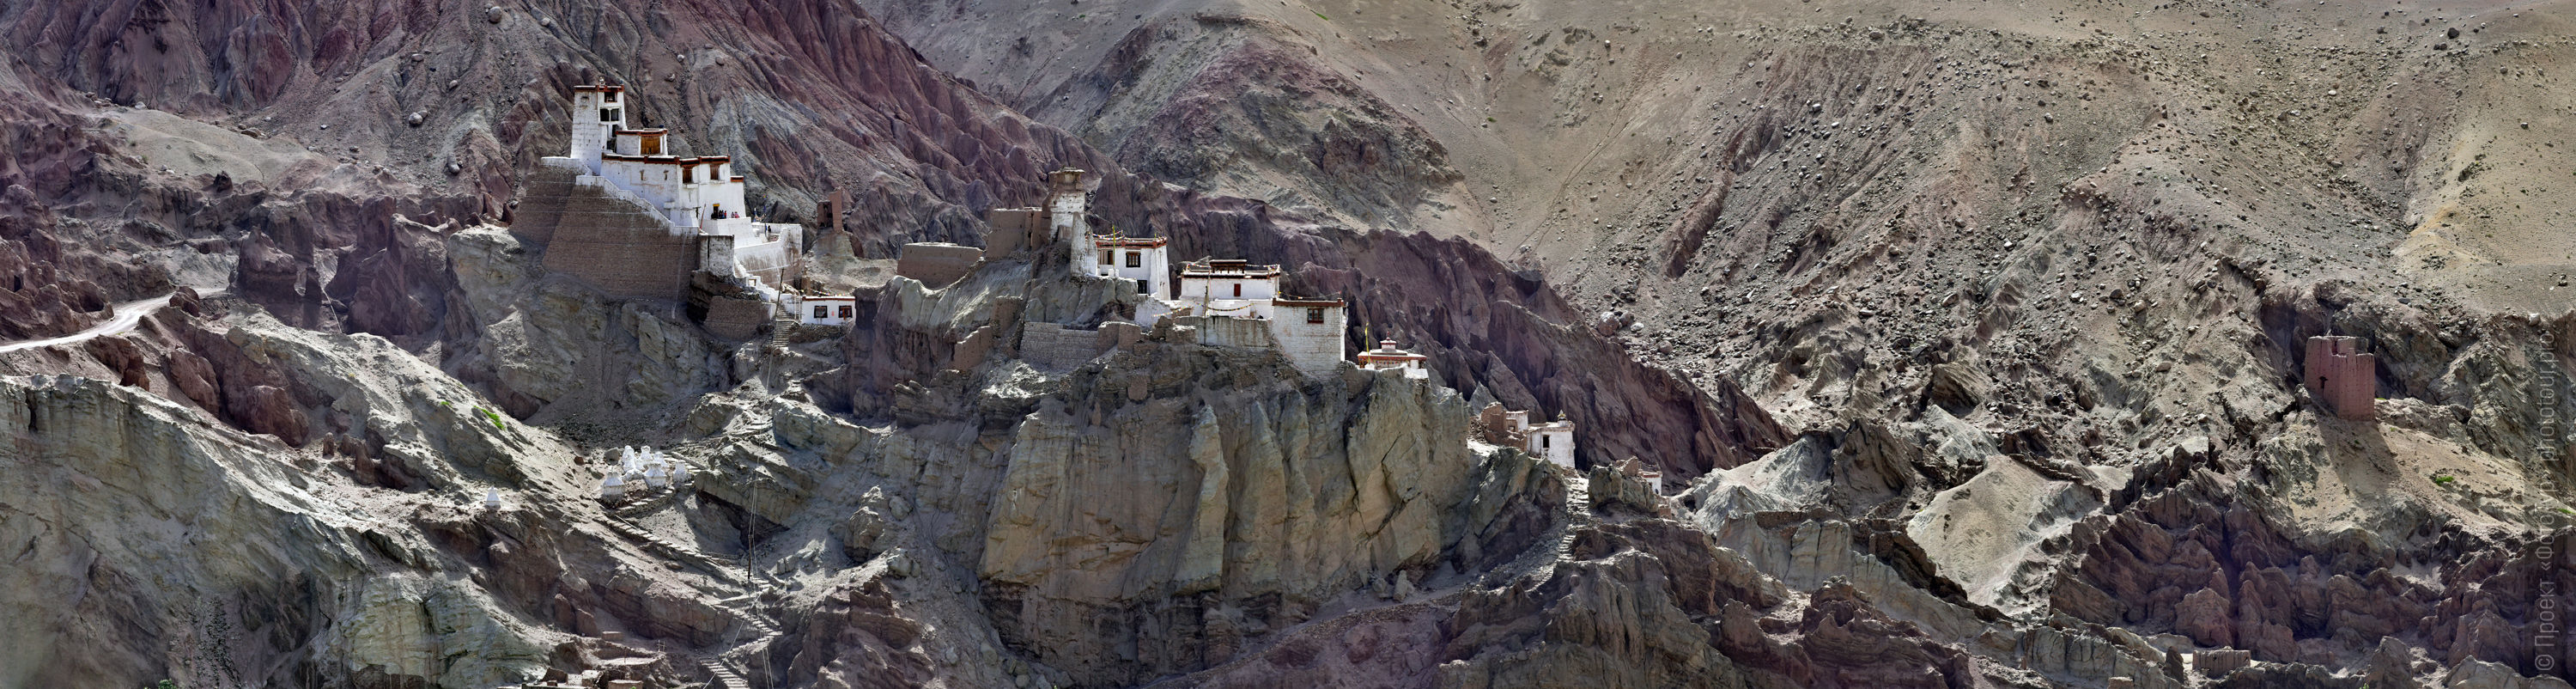 Буддийский монастырь Басго Гонпа, туры в Тибет, 2016.